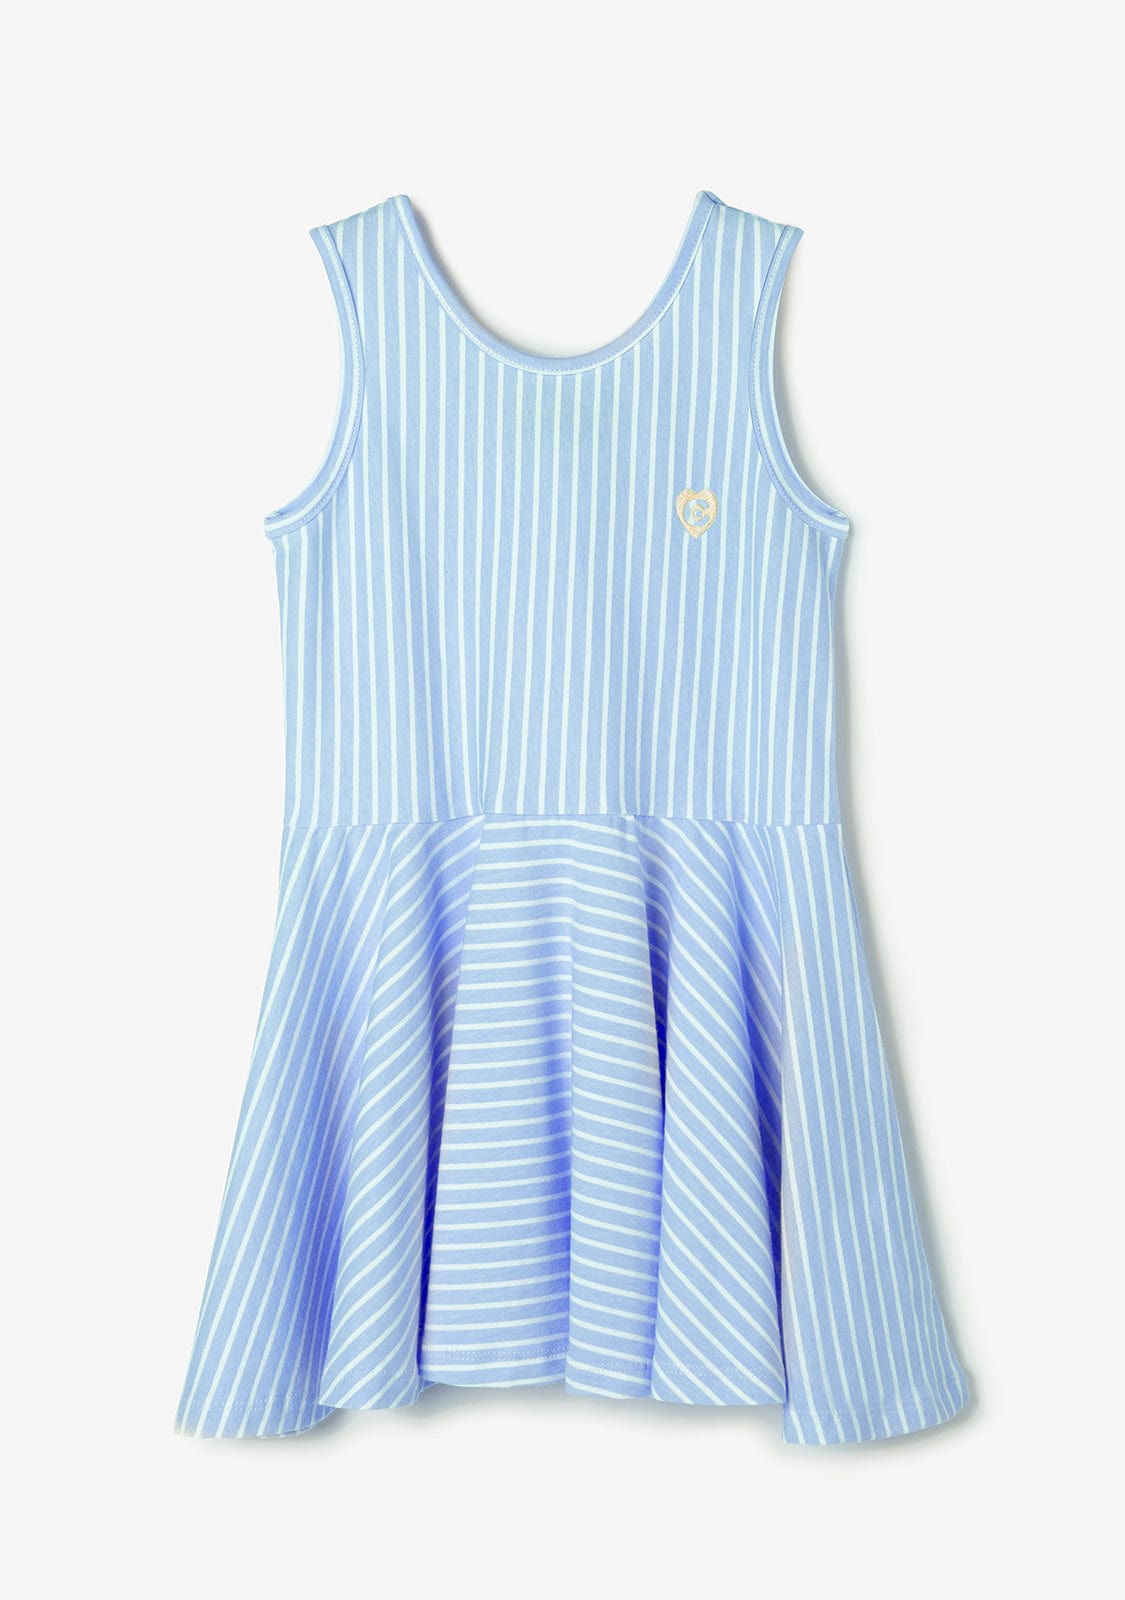 CONGUITOS TEXTIL Clothing Girl's Bluish Stripes Logo Skater Dress